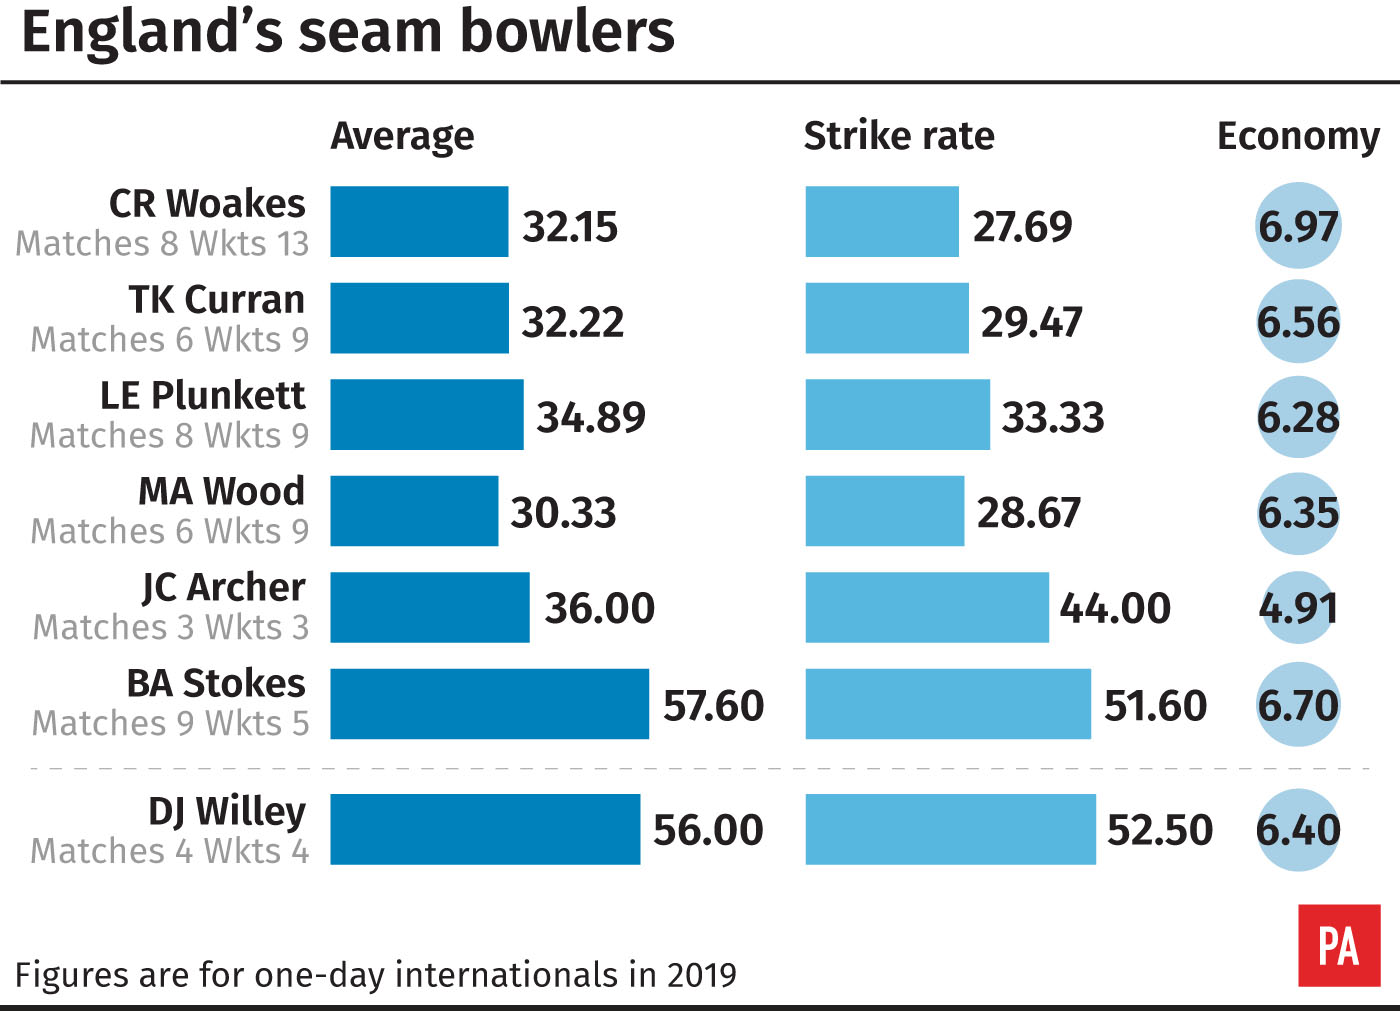 England's ODI seamers in 2019